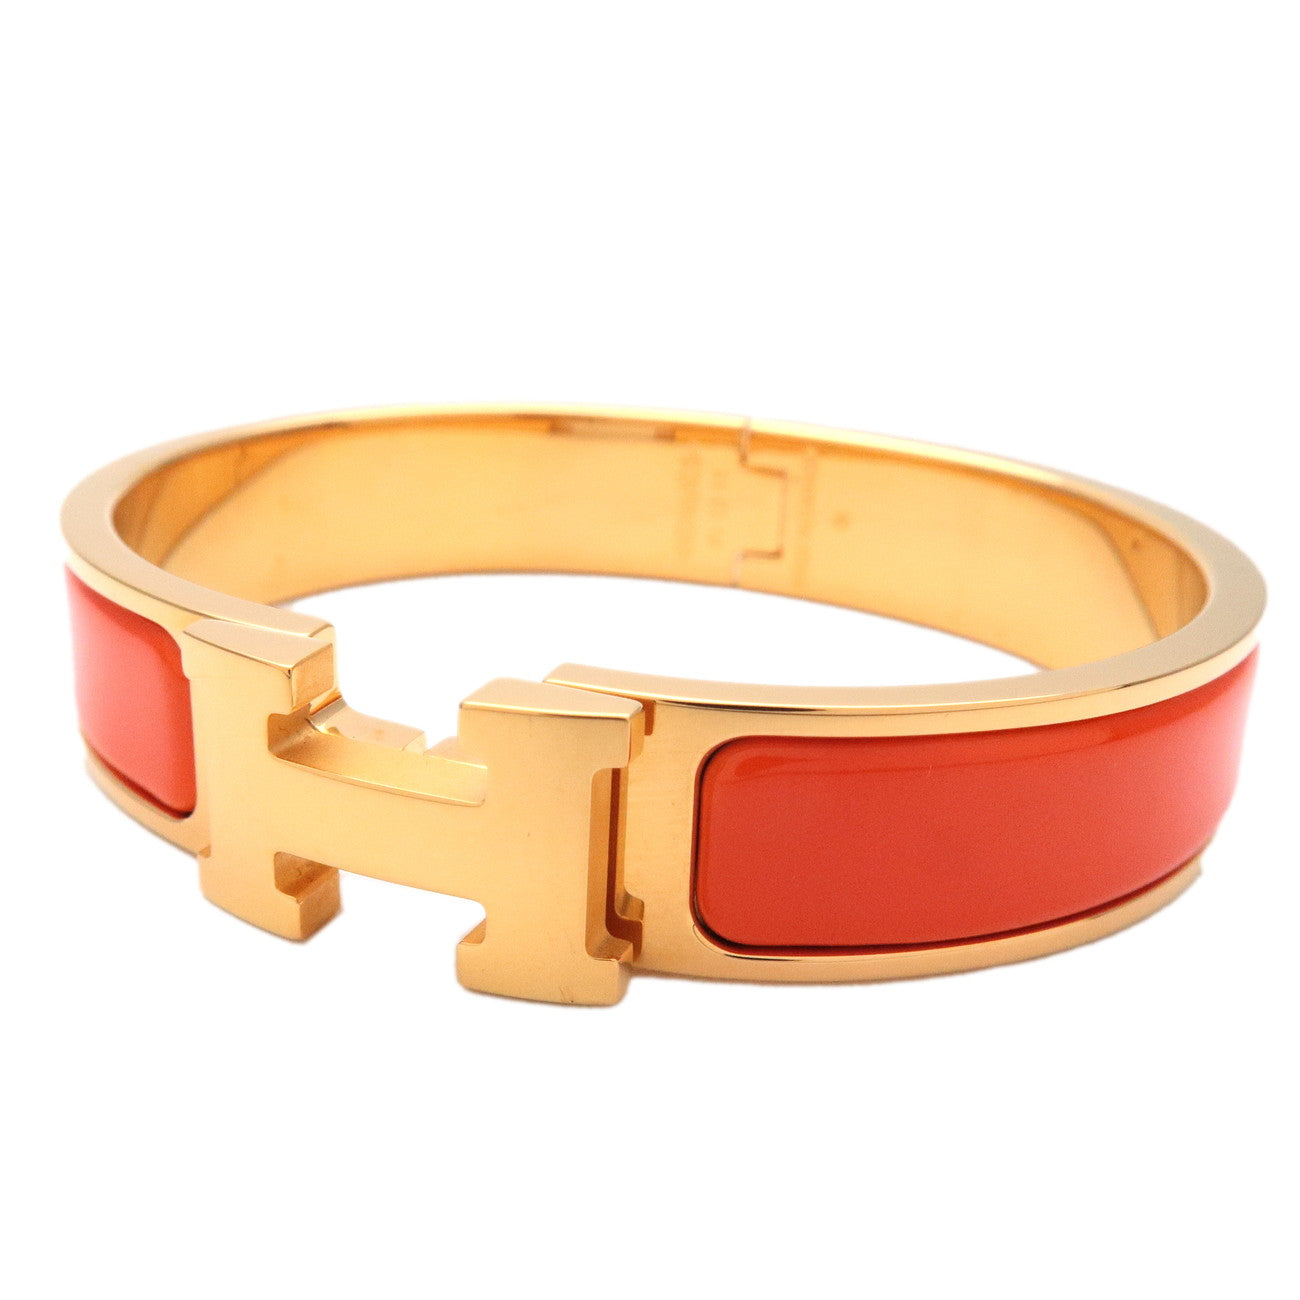 Hermes Clic H Bracelet Orange and Gold